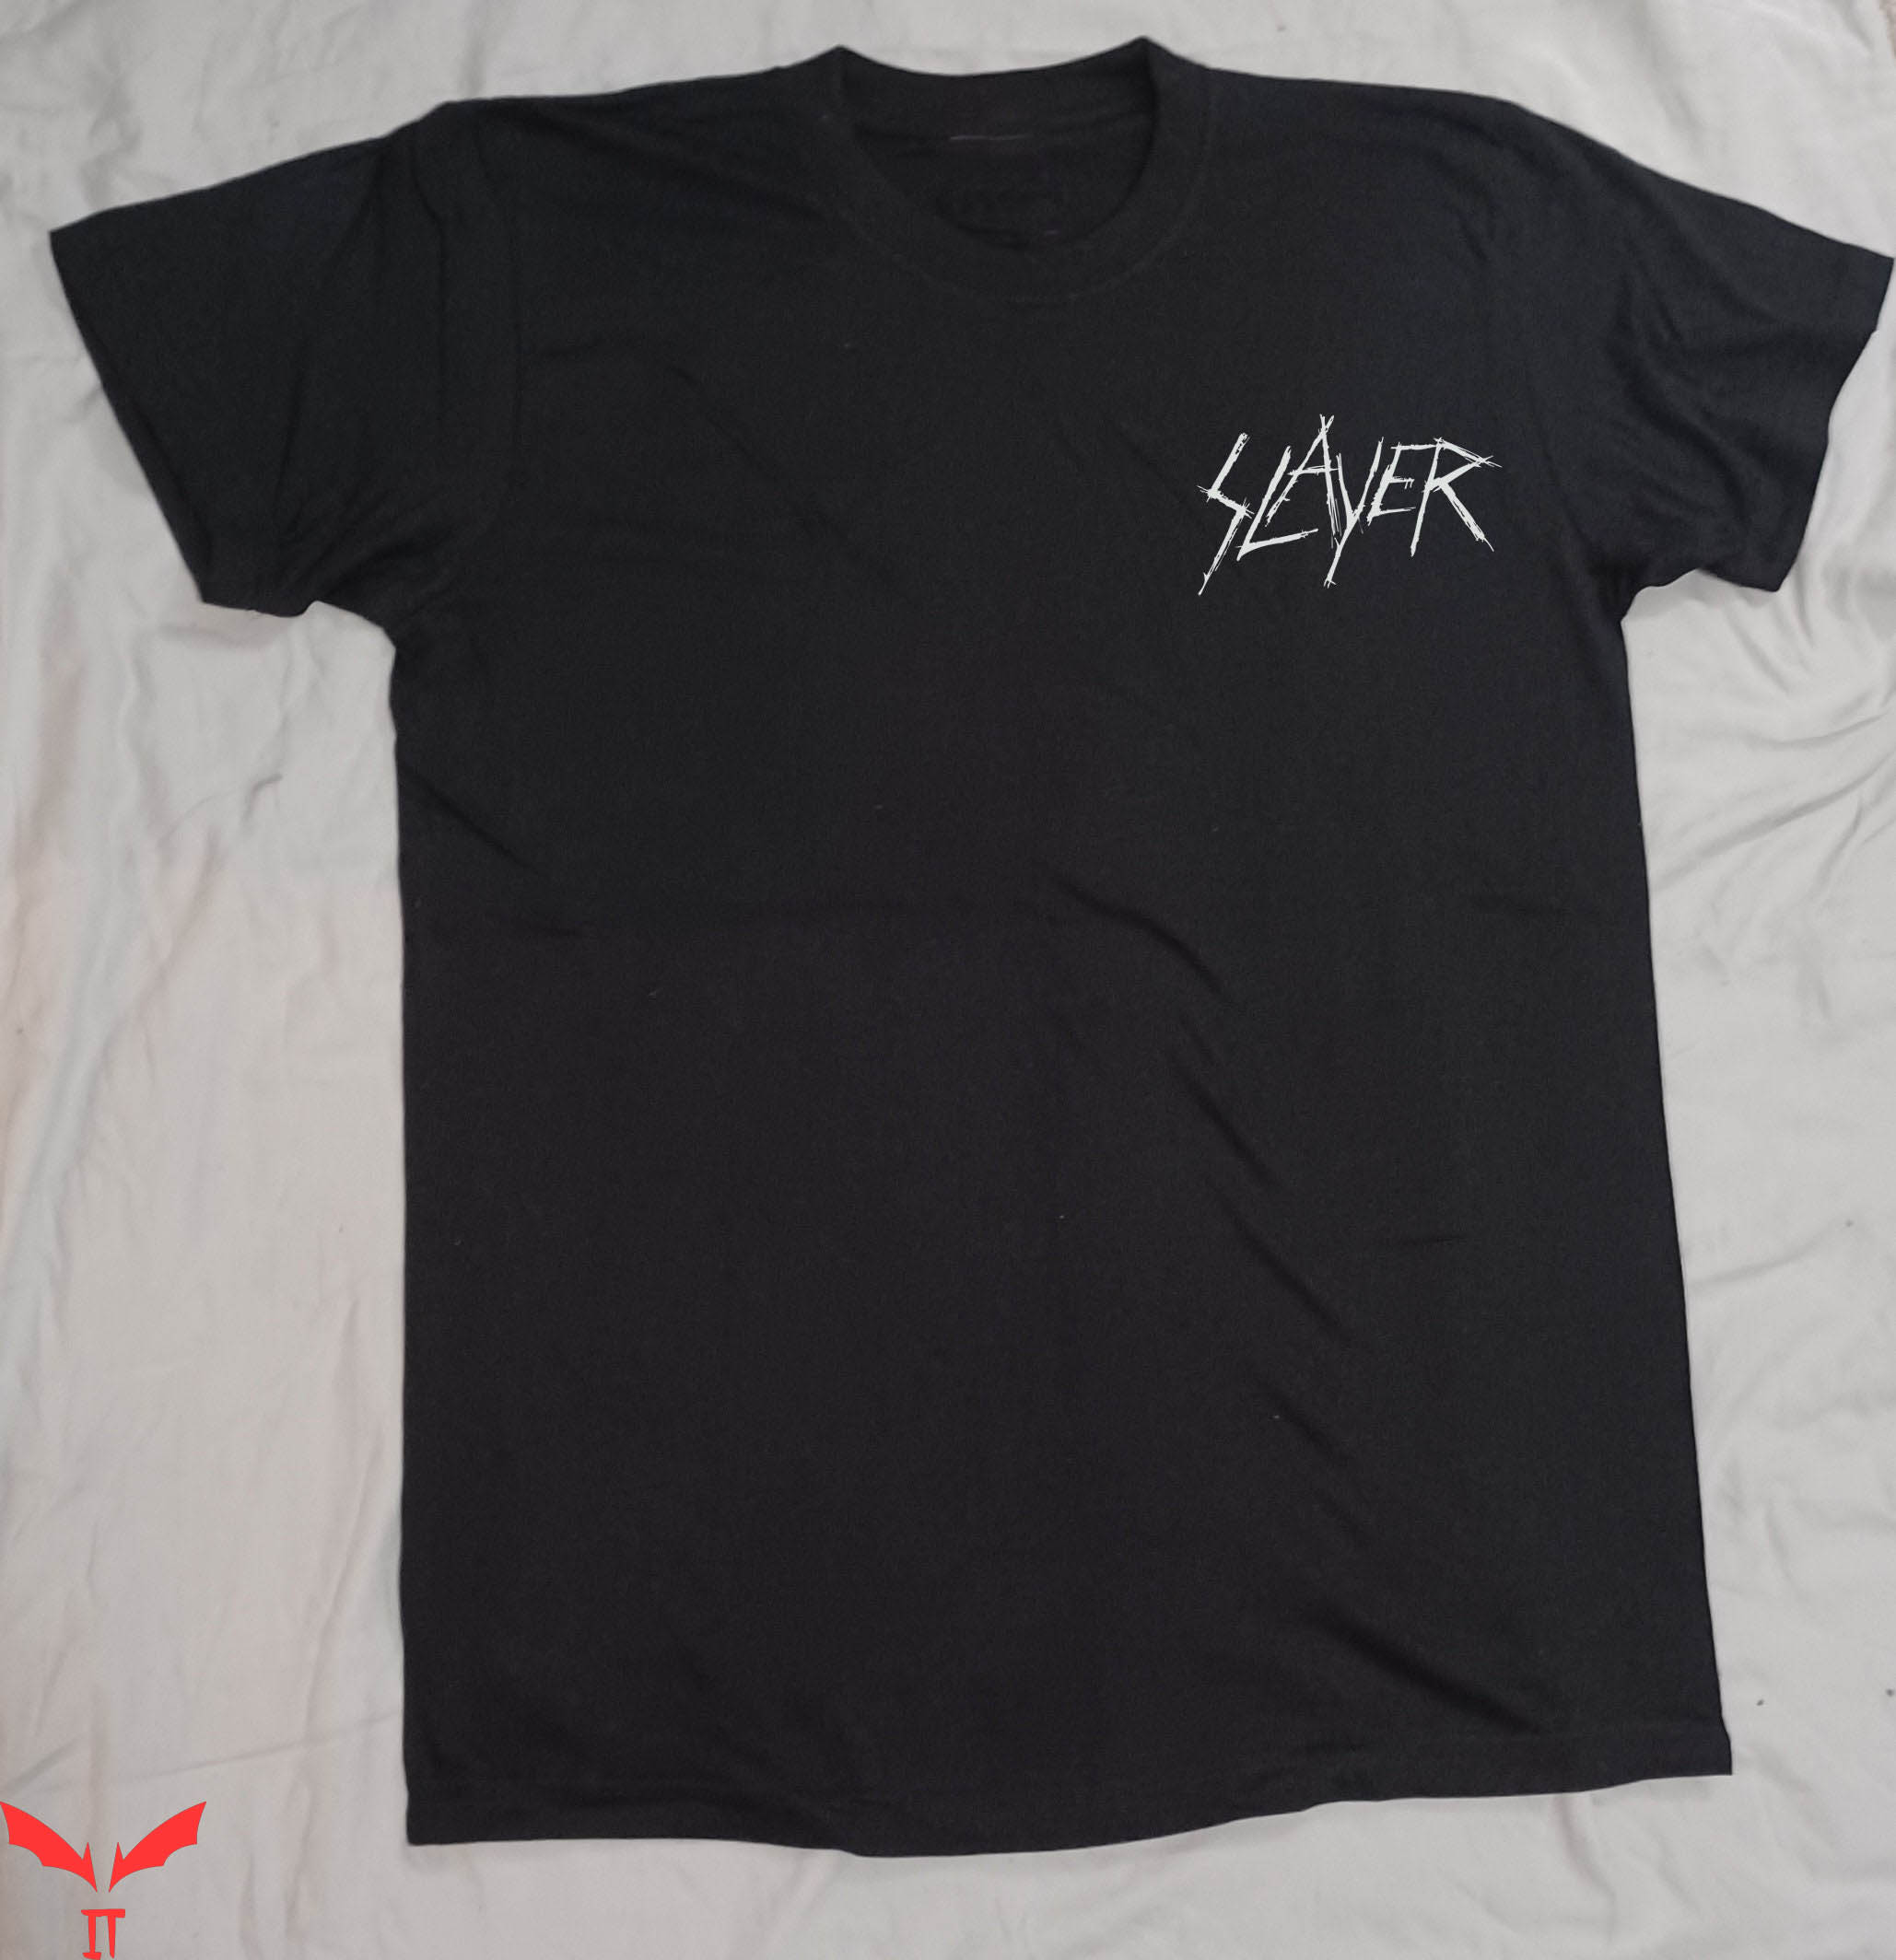 Vintage Slayer T-Shirt Retro Rock Trendy Style Tee Shirt